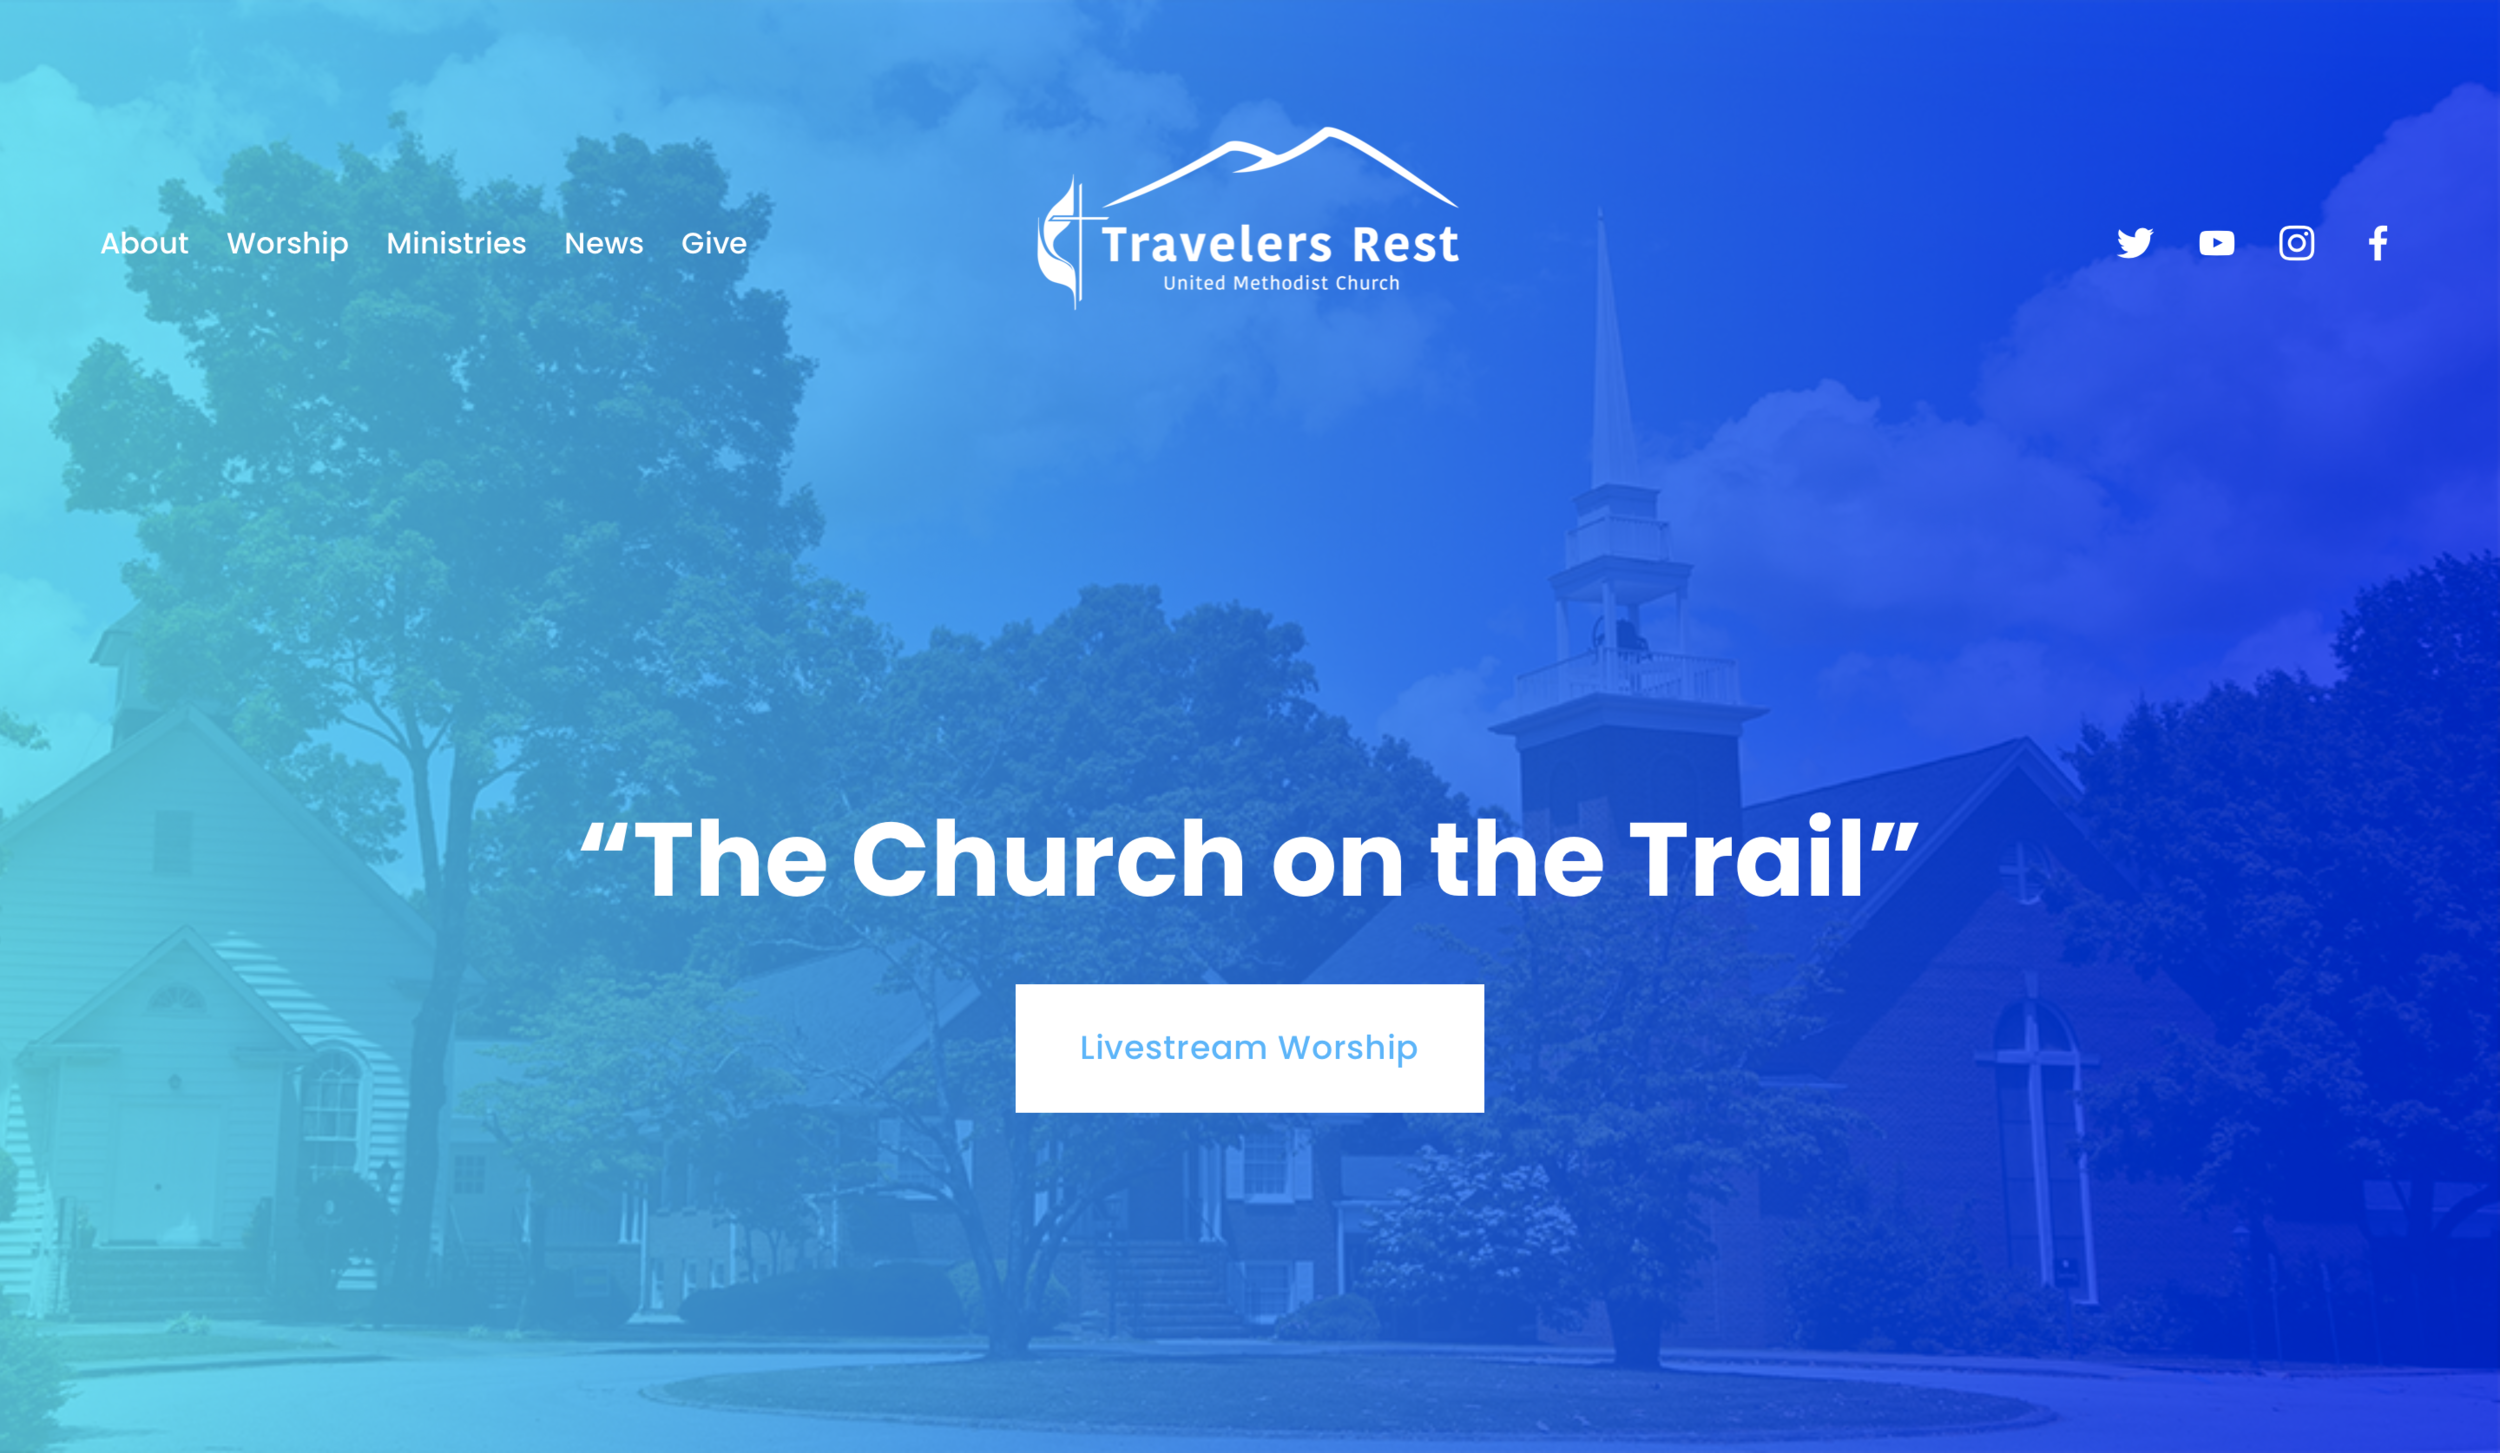 Travelers Rest United Methodist Church